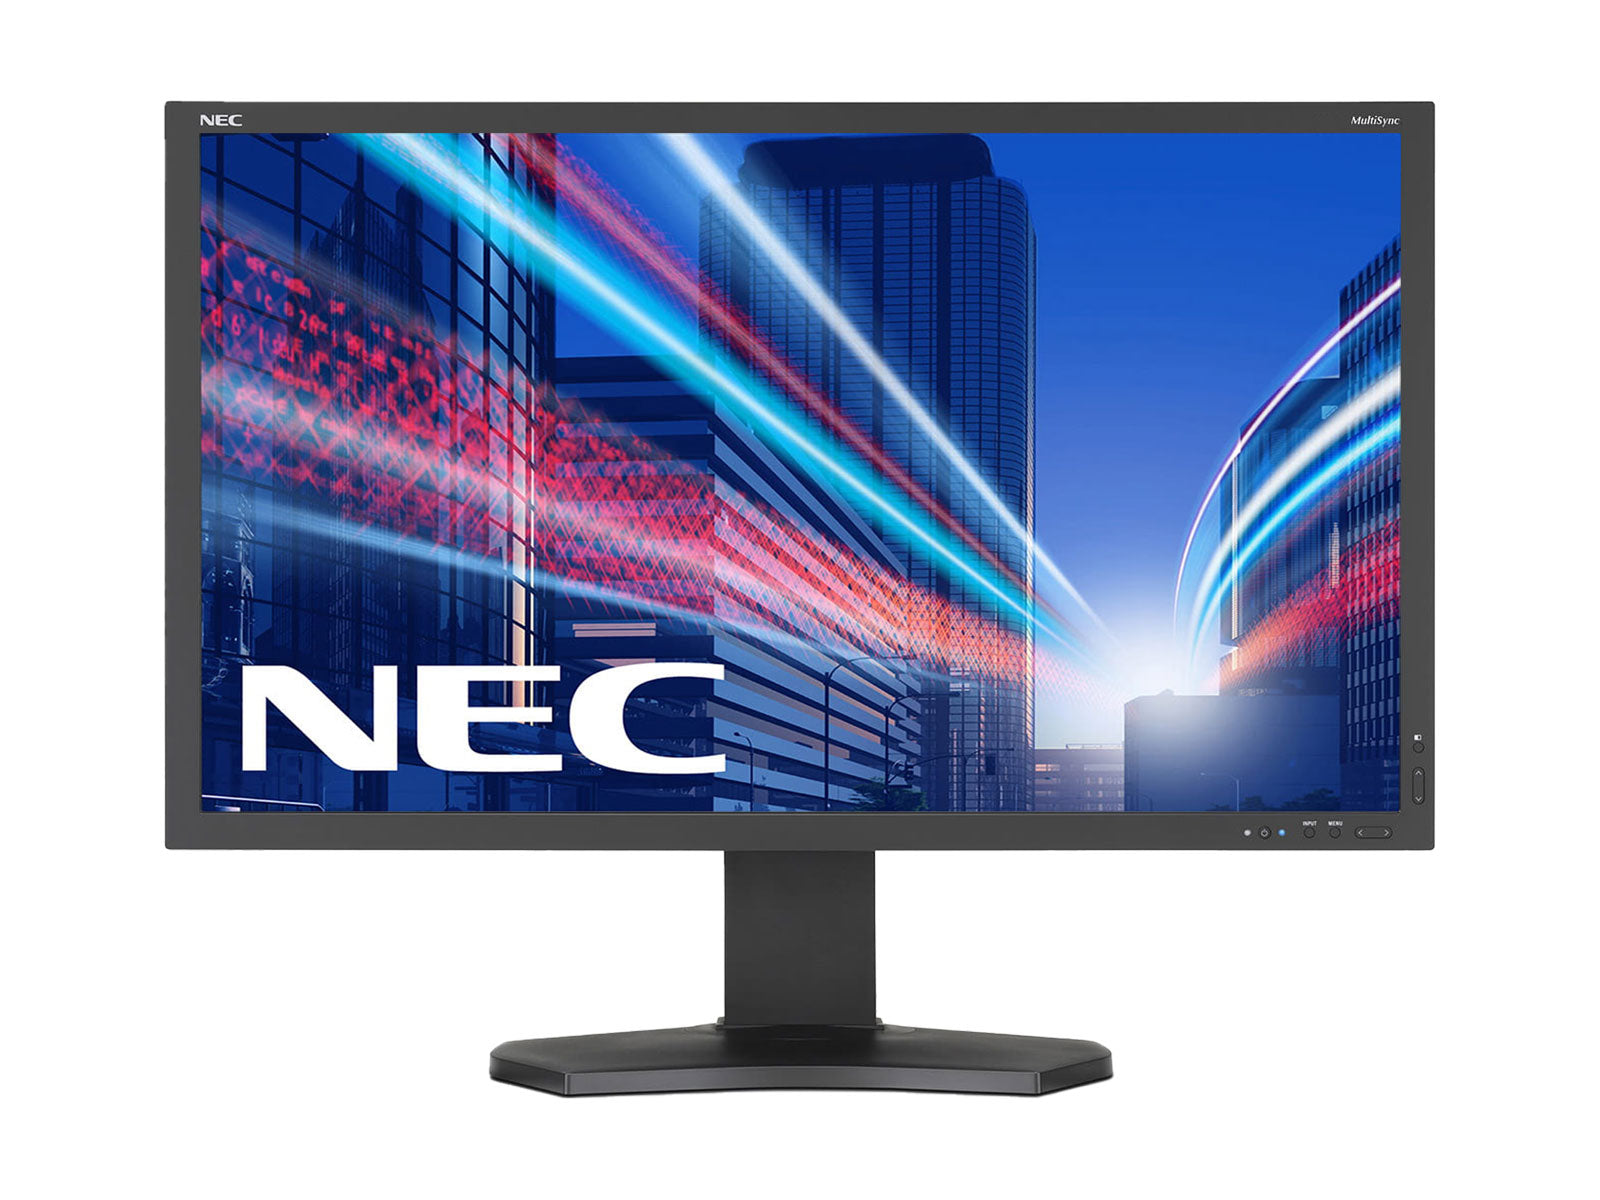 NEC MultiSync PA241W 24" WUXGA 1920 x 1200 Widescreen Professional Graphics Display Monitor (PA241W)